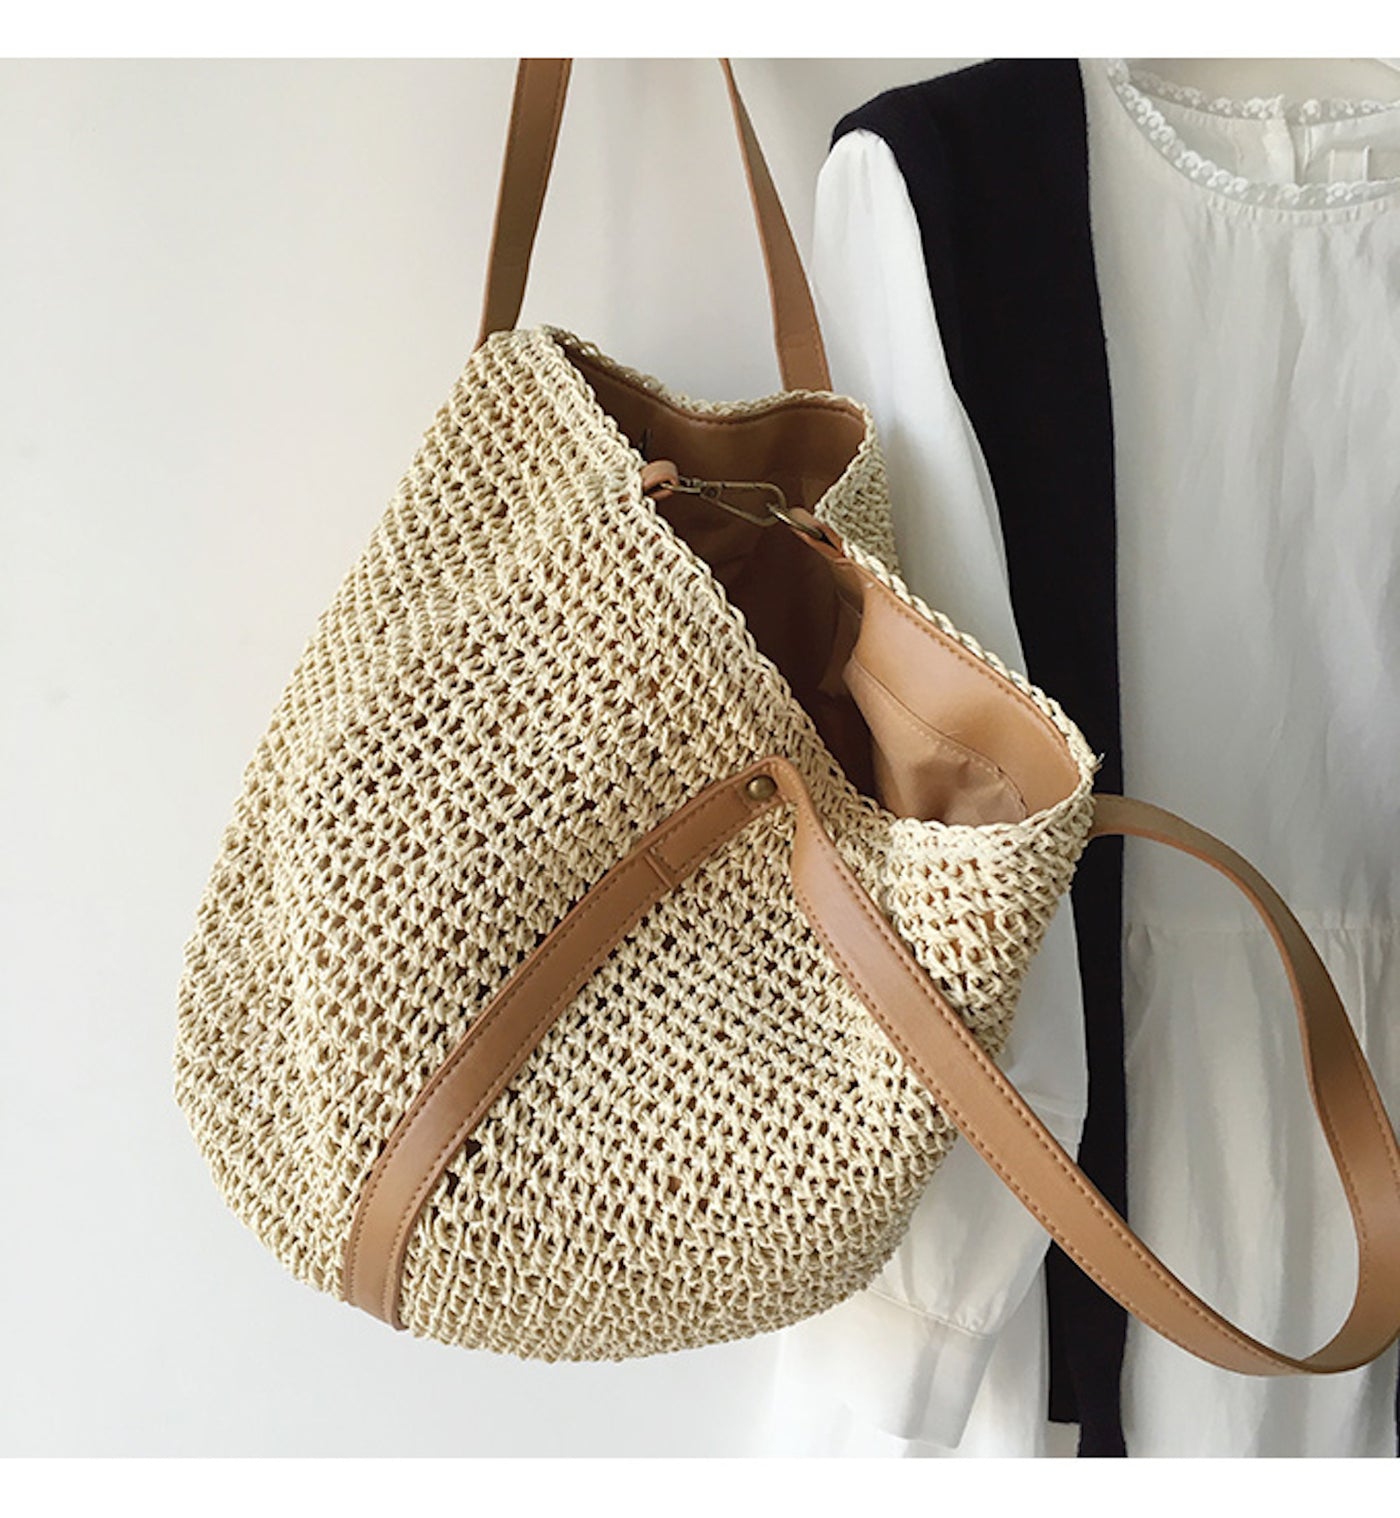 Elena Handbags Large Straw Woven Tote Bag White